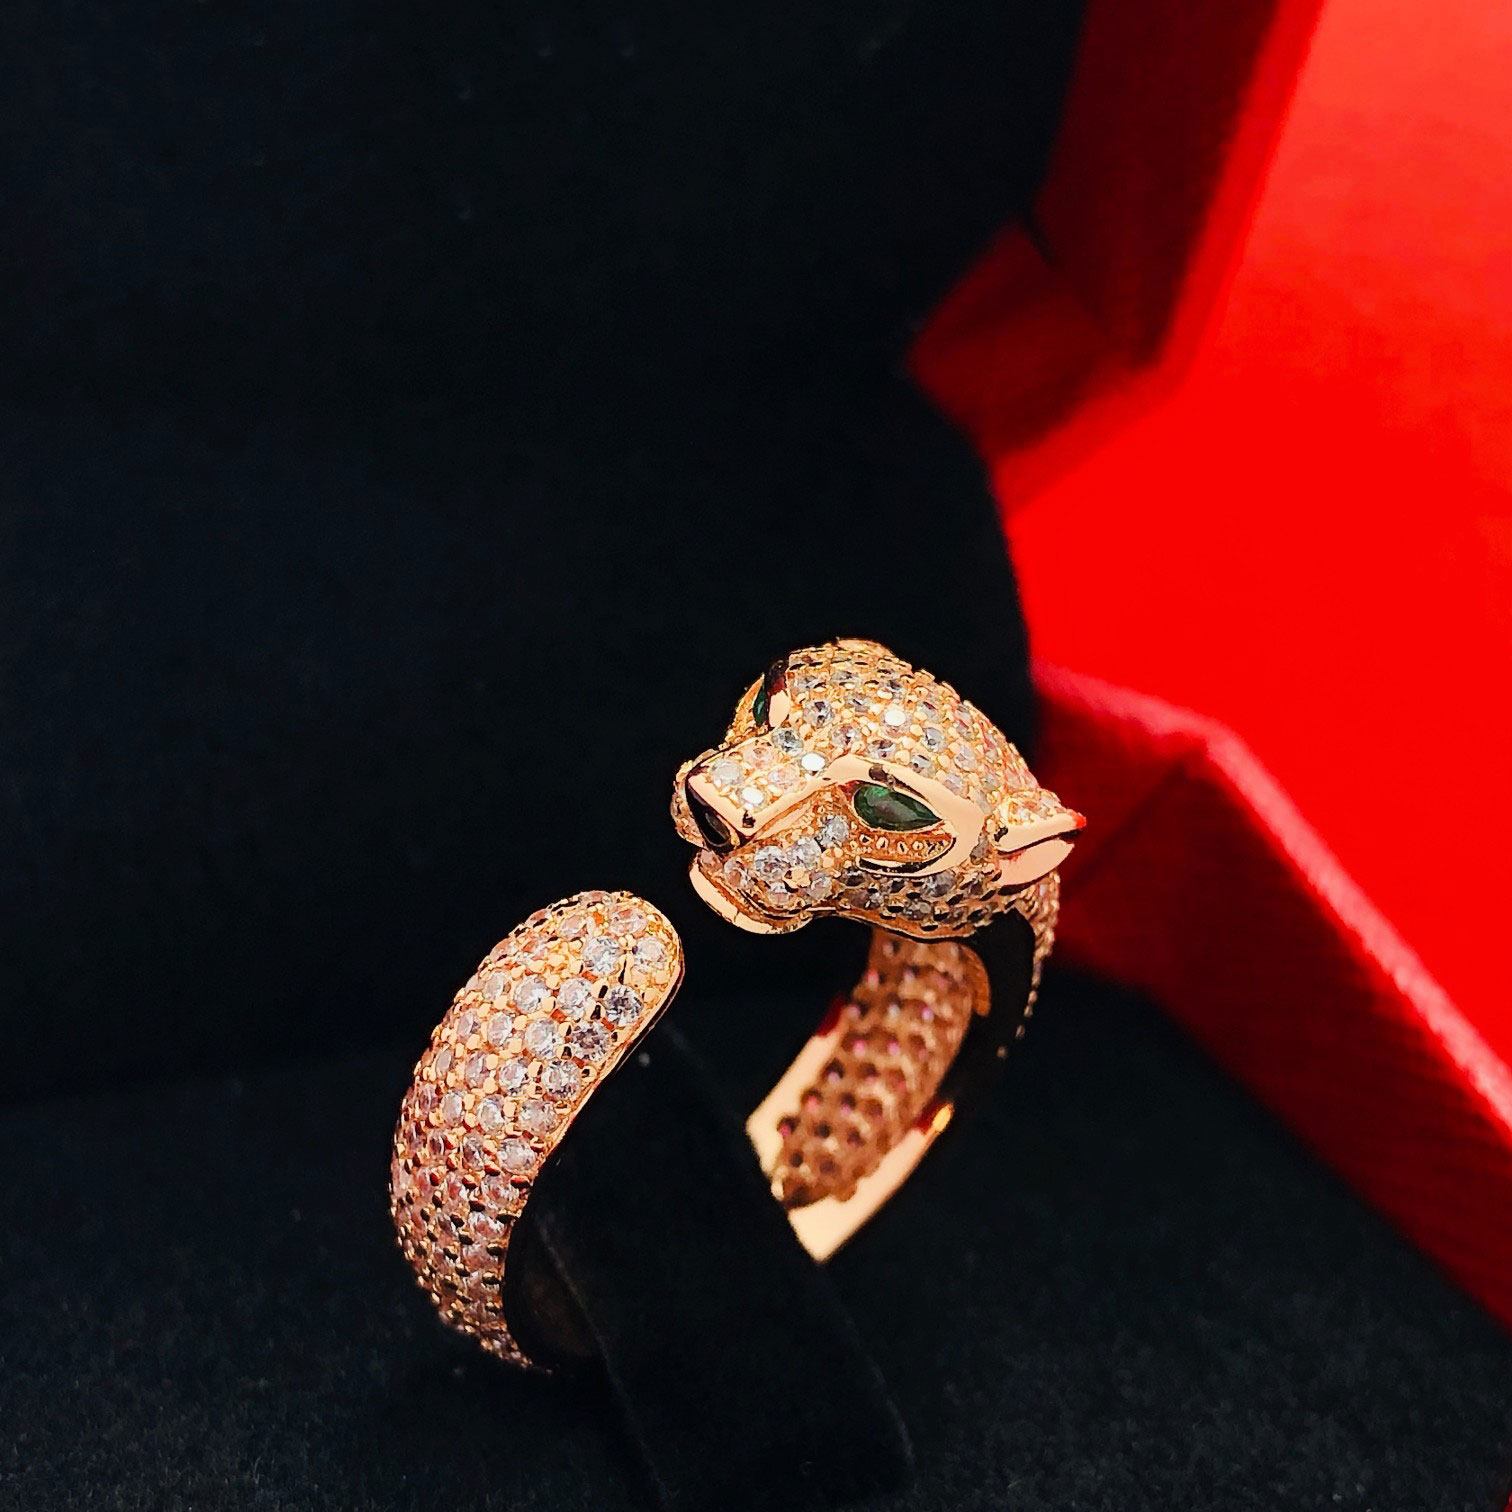 Designer Rings Love Ring Diamond-Pave Wedding Ring Silver Women/Men Luxury Jewelry Titanium Steel